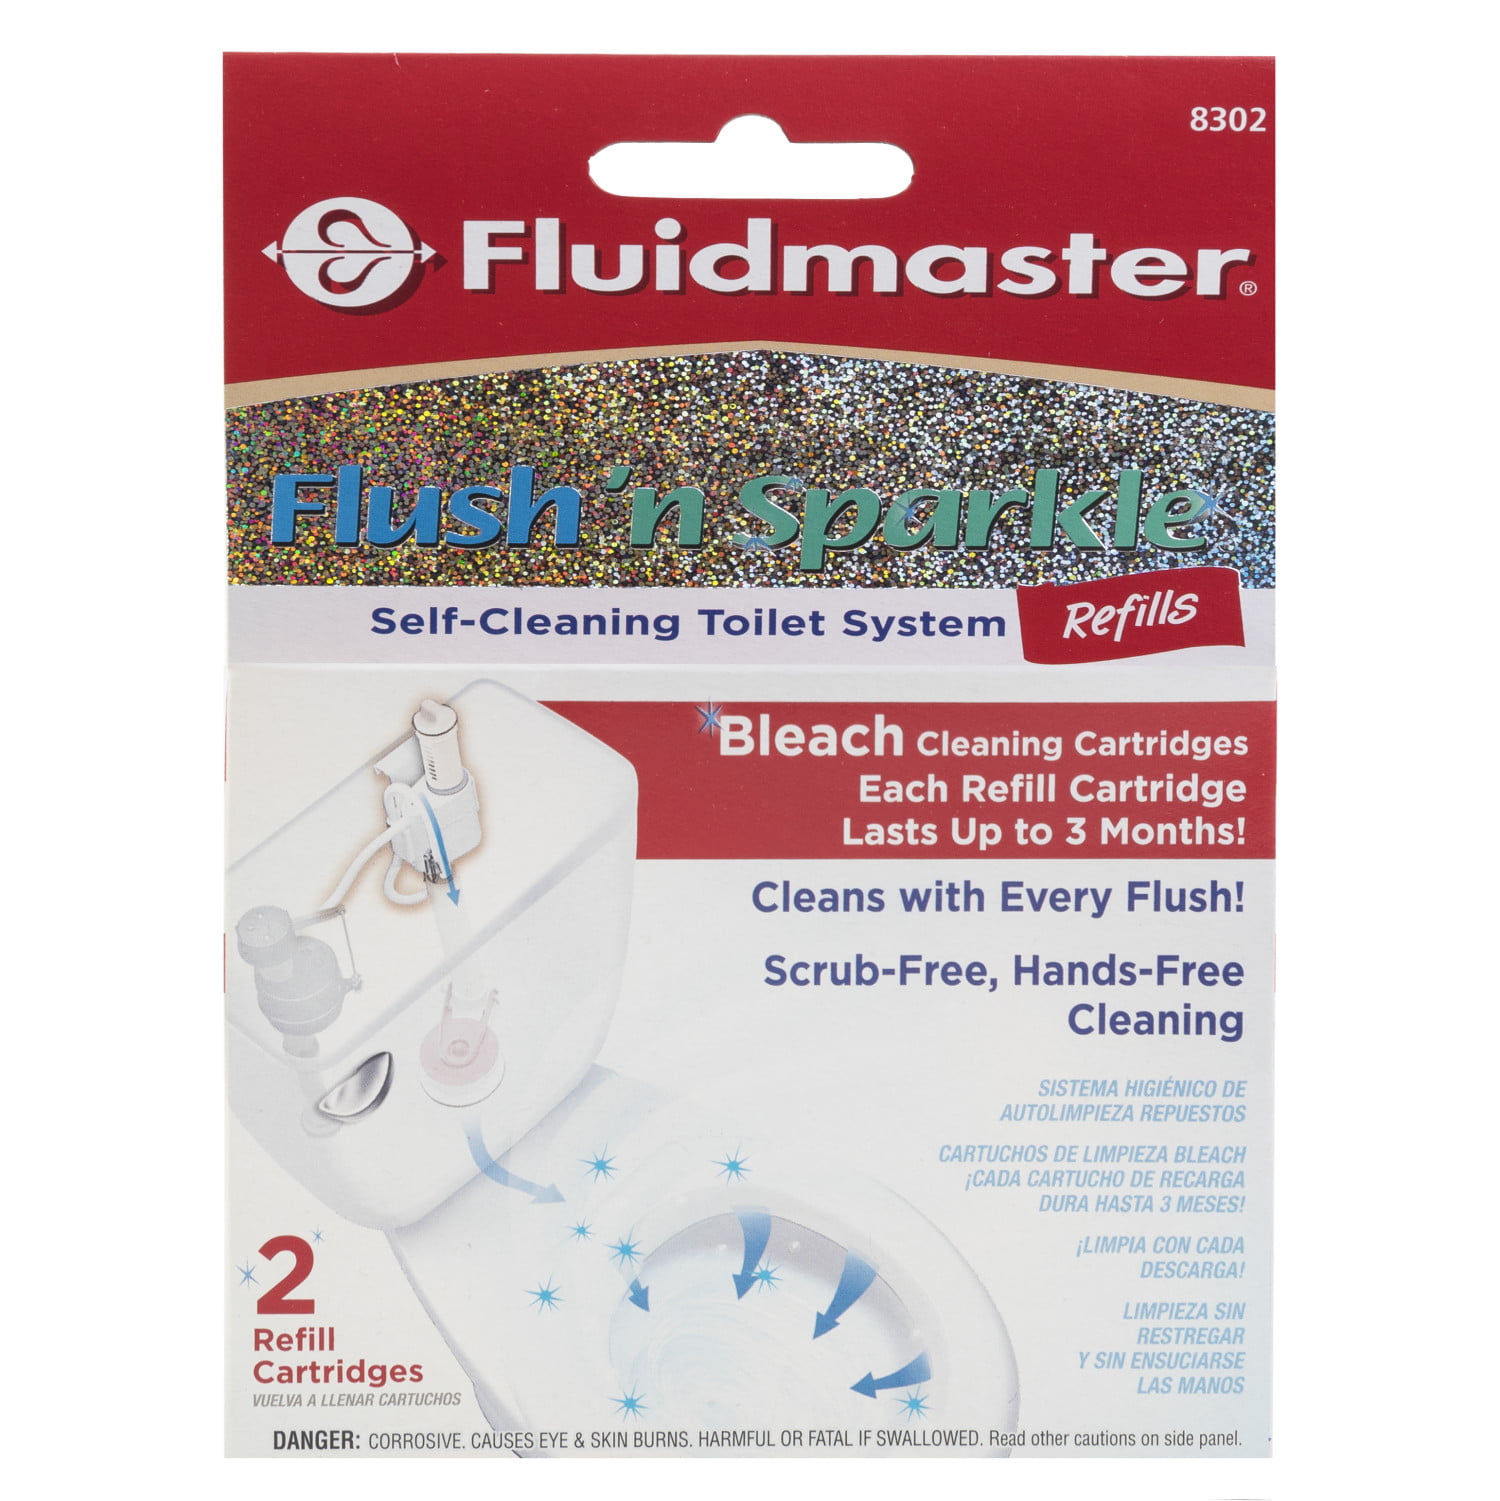 fluidmaster flush n sparkle